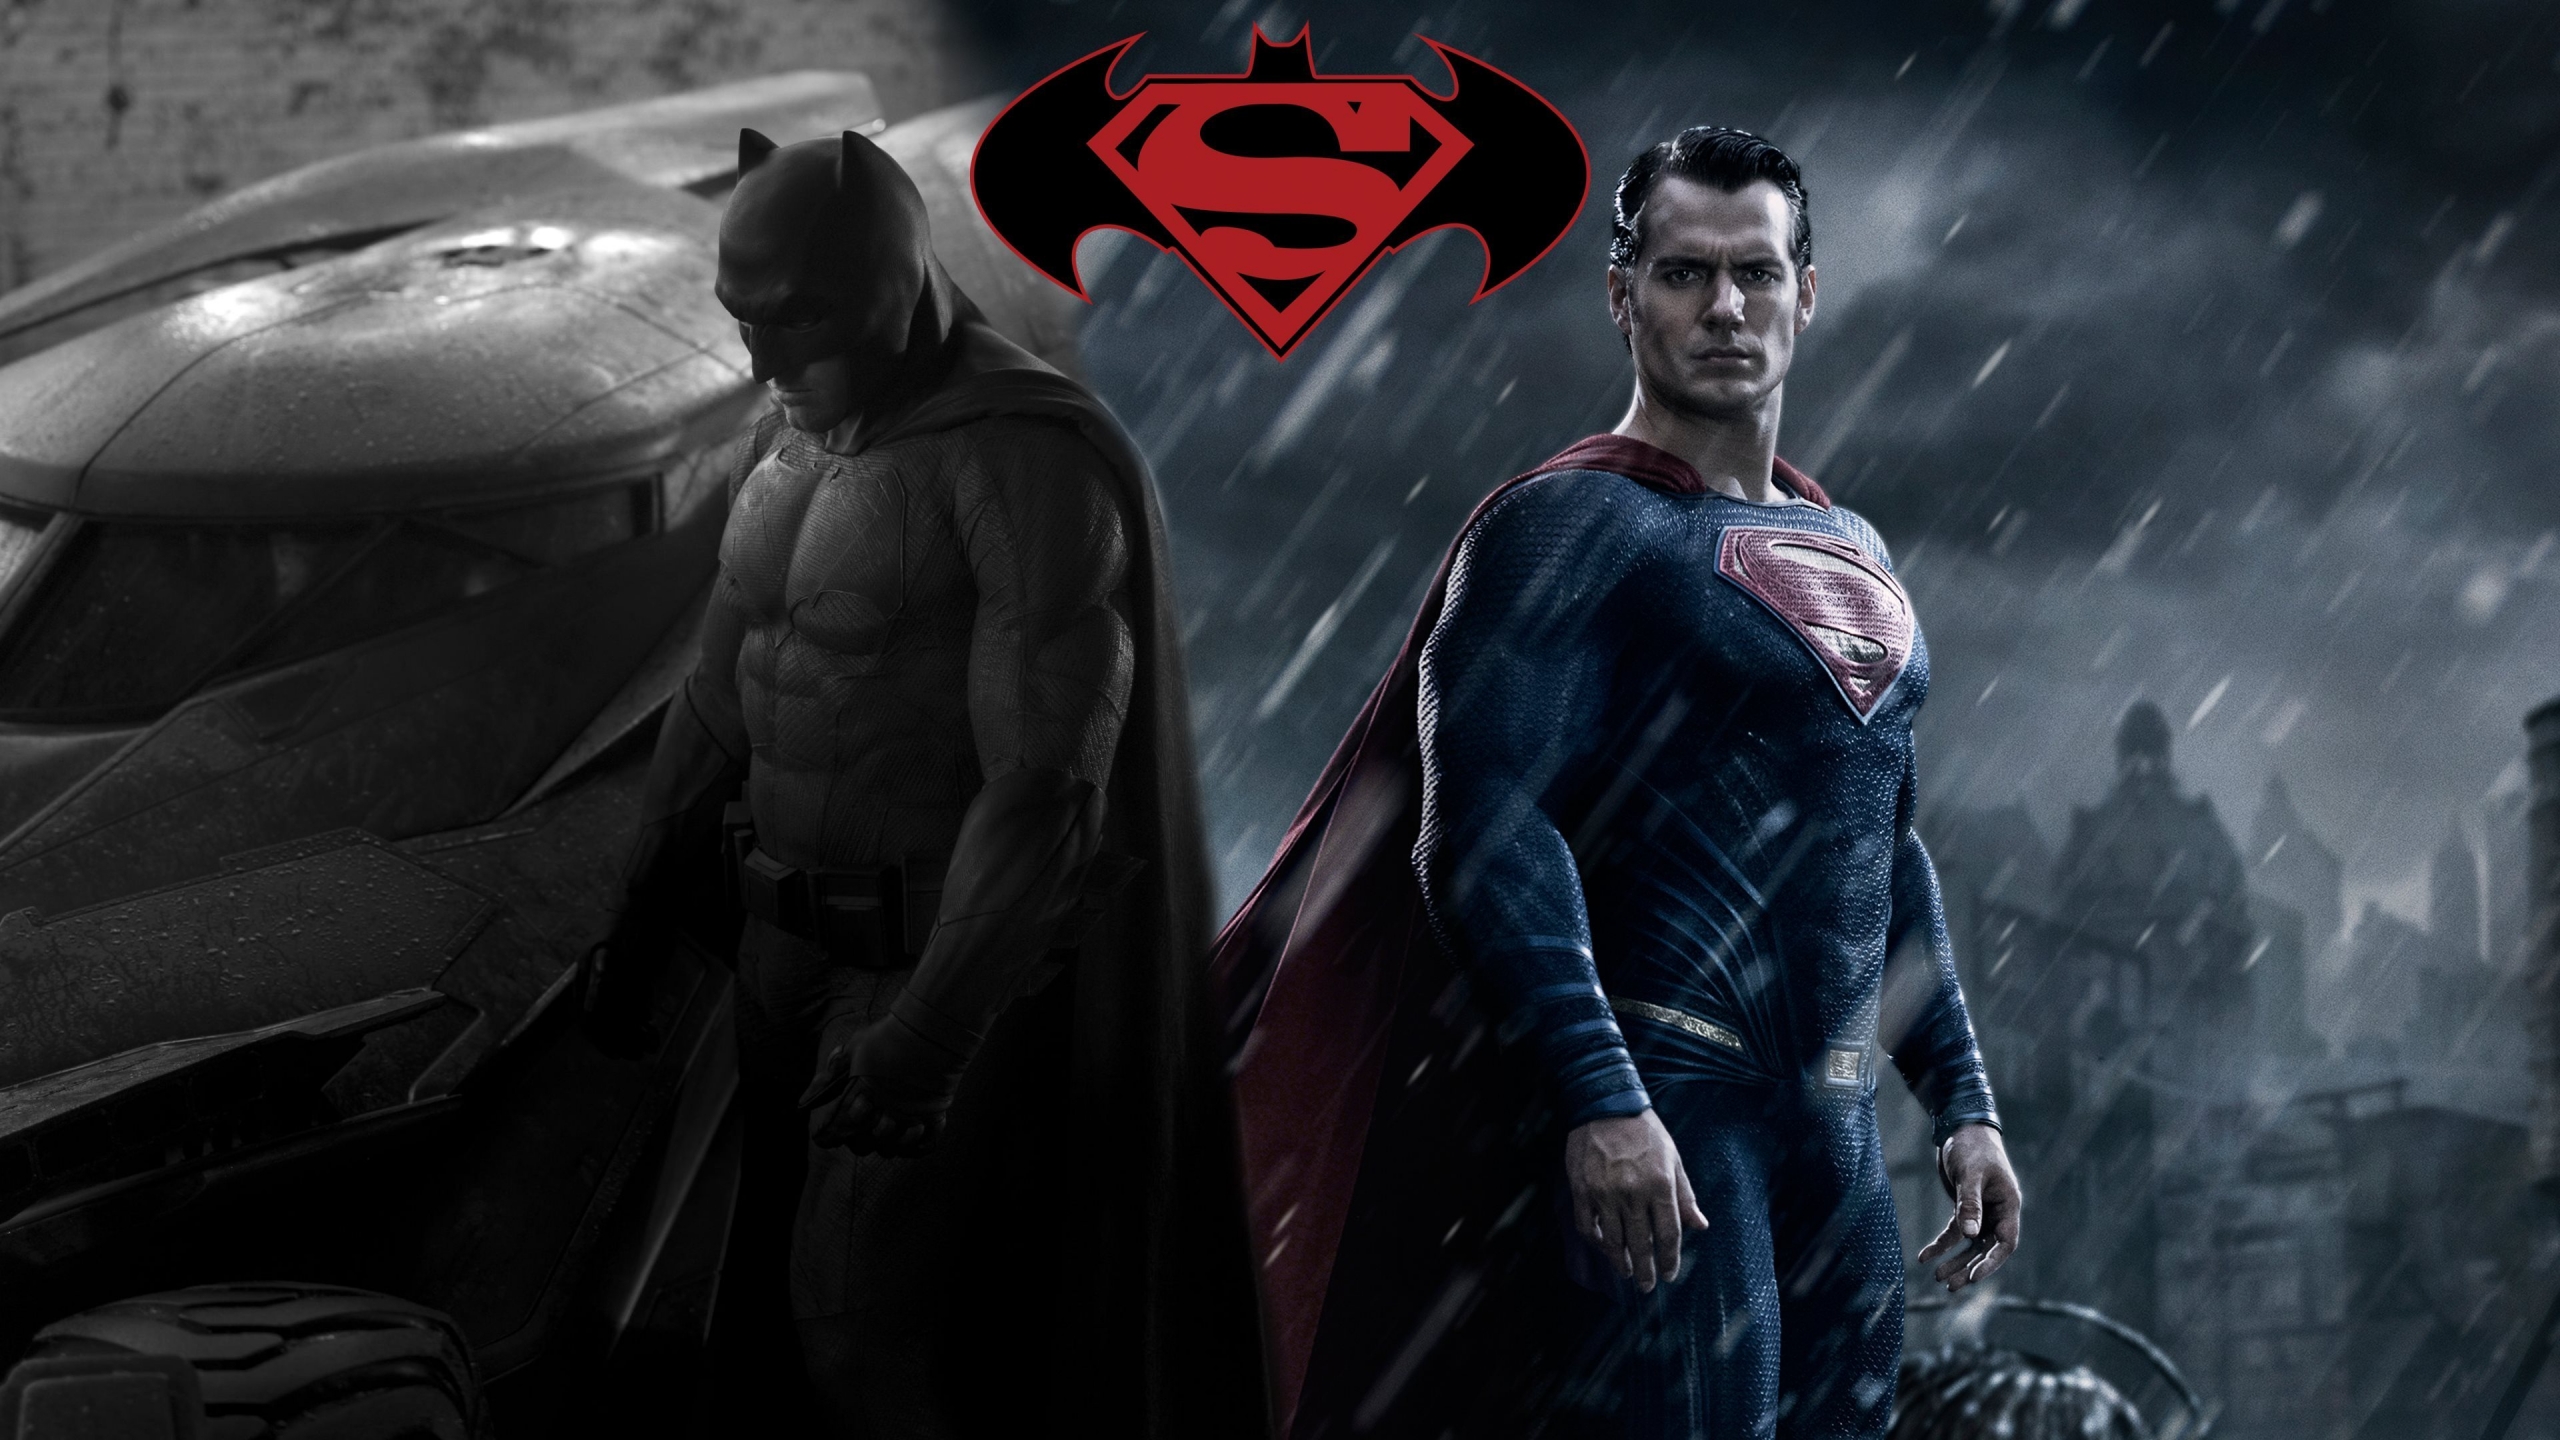 Batman vs Superman Fan Art for 2560x1440 HDTV resolution